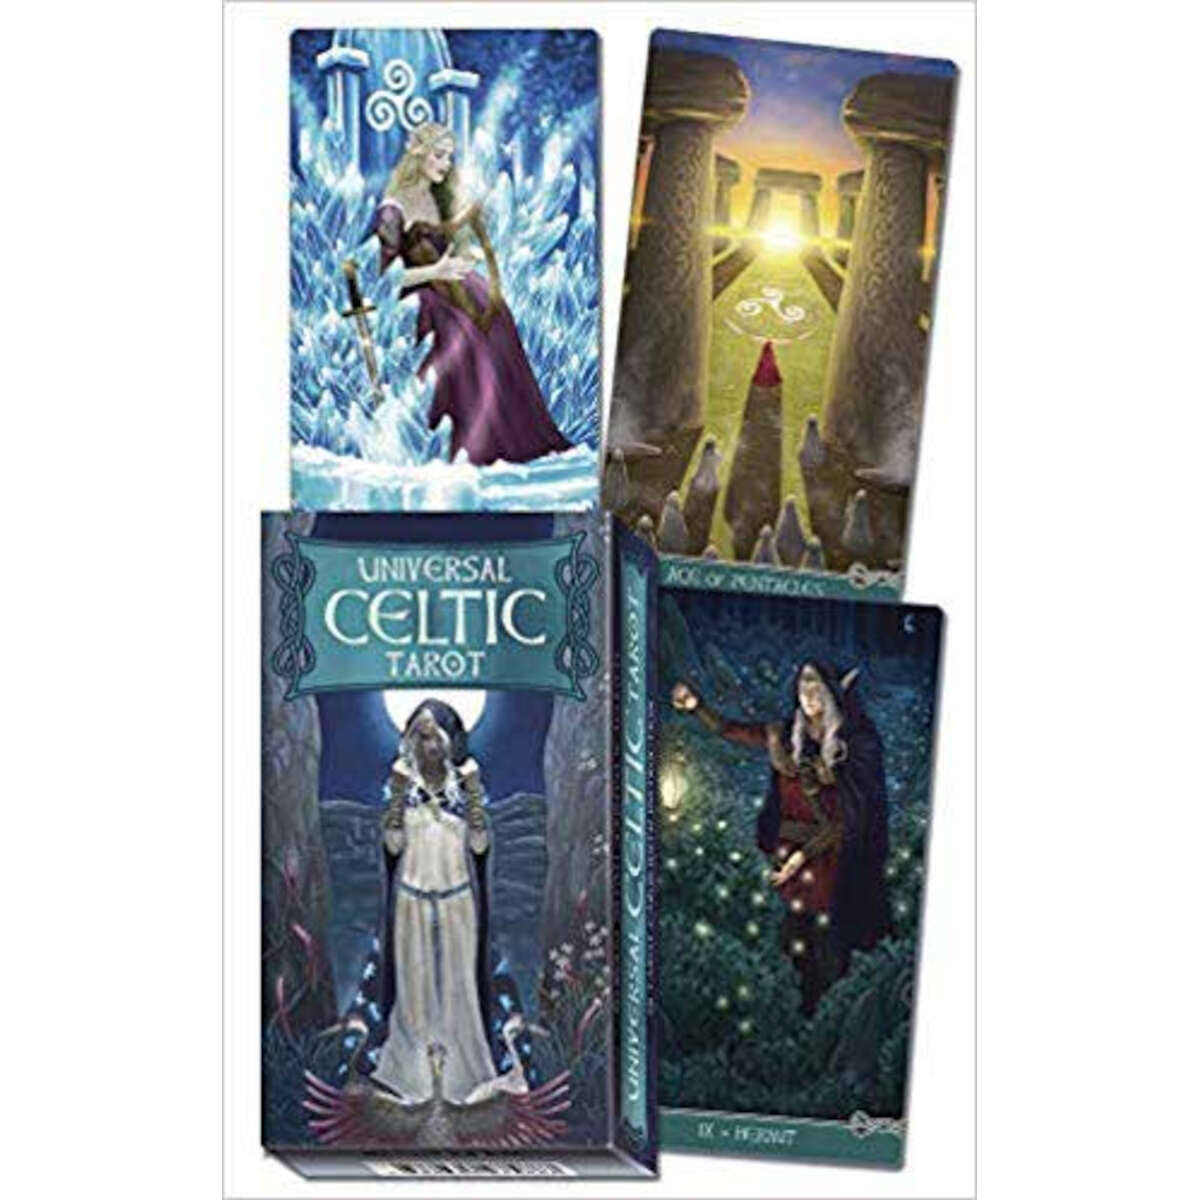 Universal Celtic Tarot [Book]